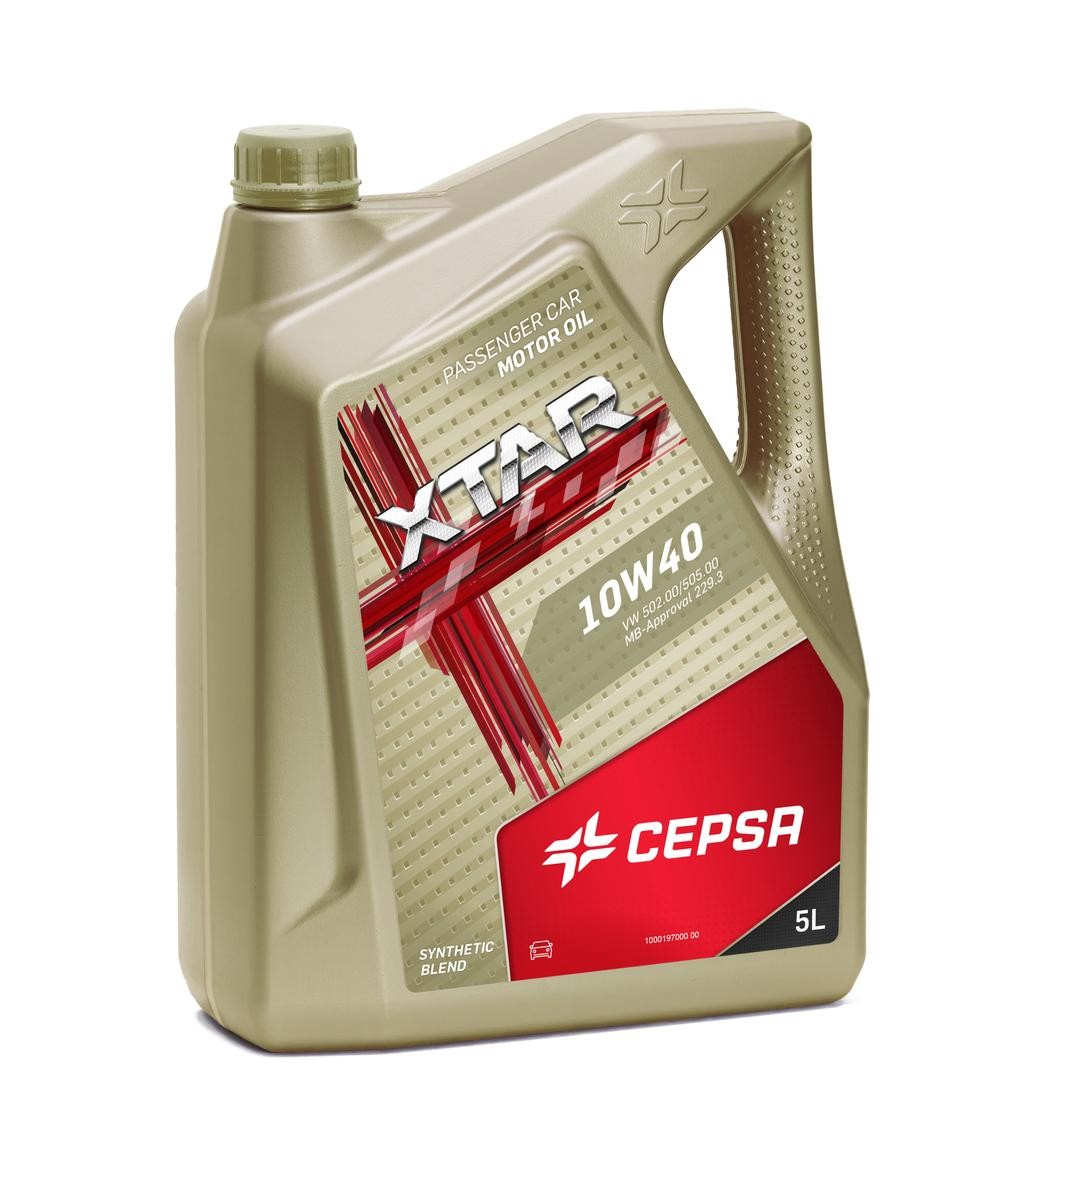 Car oil CEPSA 10W-40, 5l, Synthetic, Synthetic Oil longlife 513973090